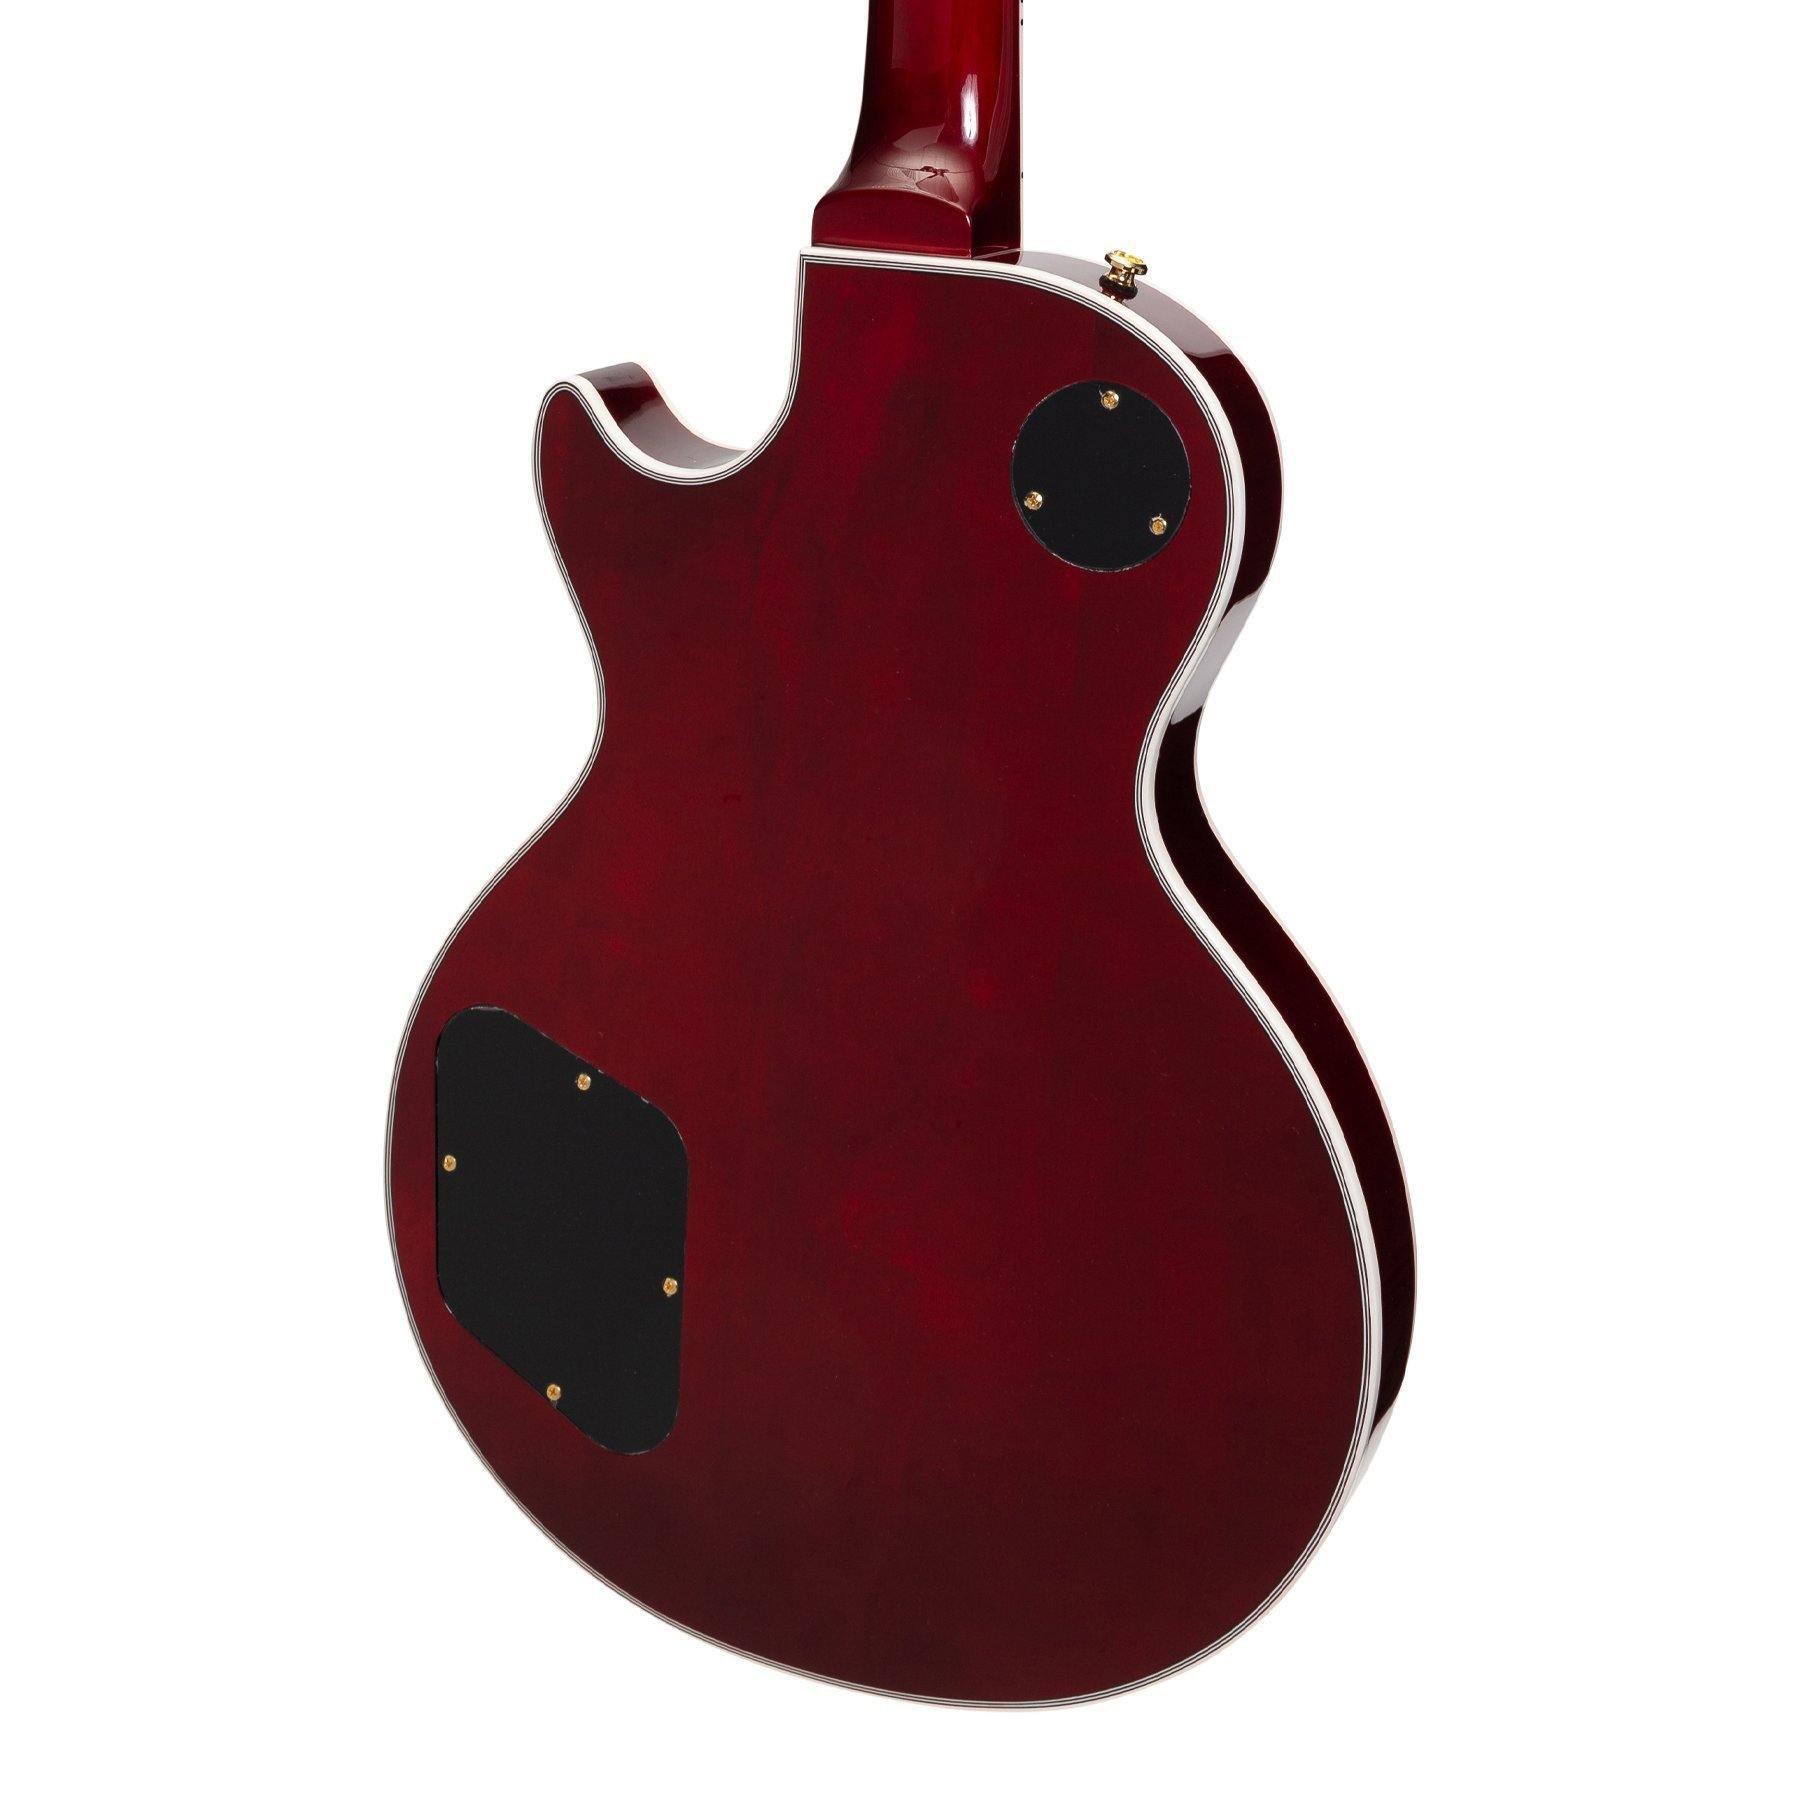 Tokai Trad Lp Custom W/Gigbag Wine Red - Guitars - Electric by Tokai at Muso's Stuff